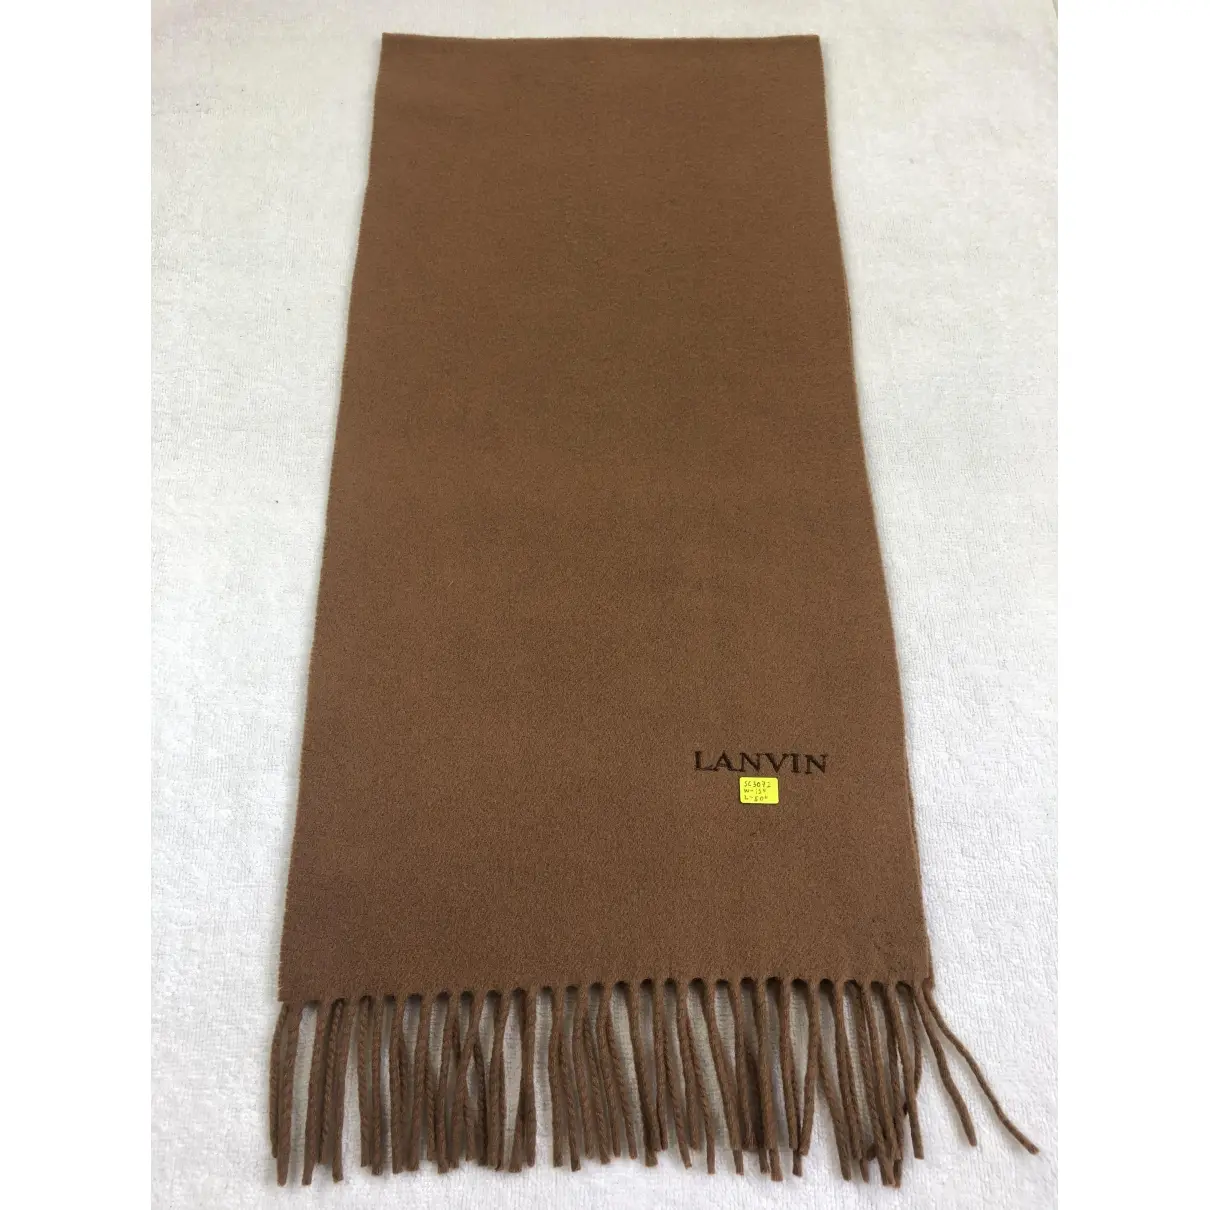 Lanvin Wool scarf & pocket square for sale